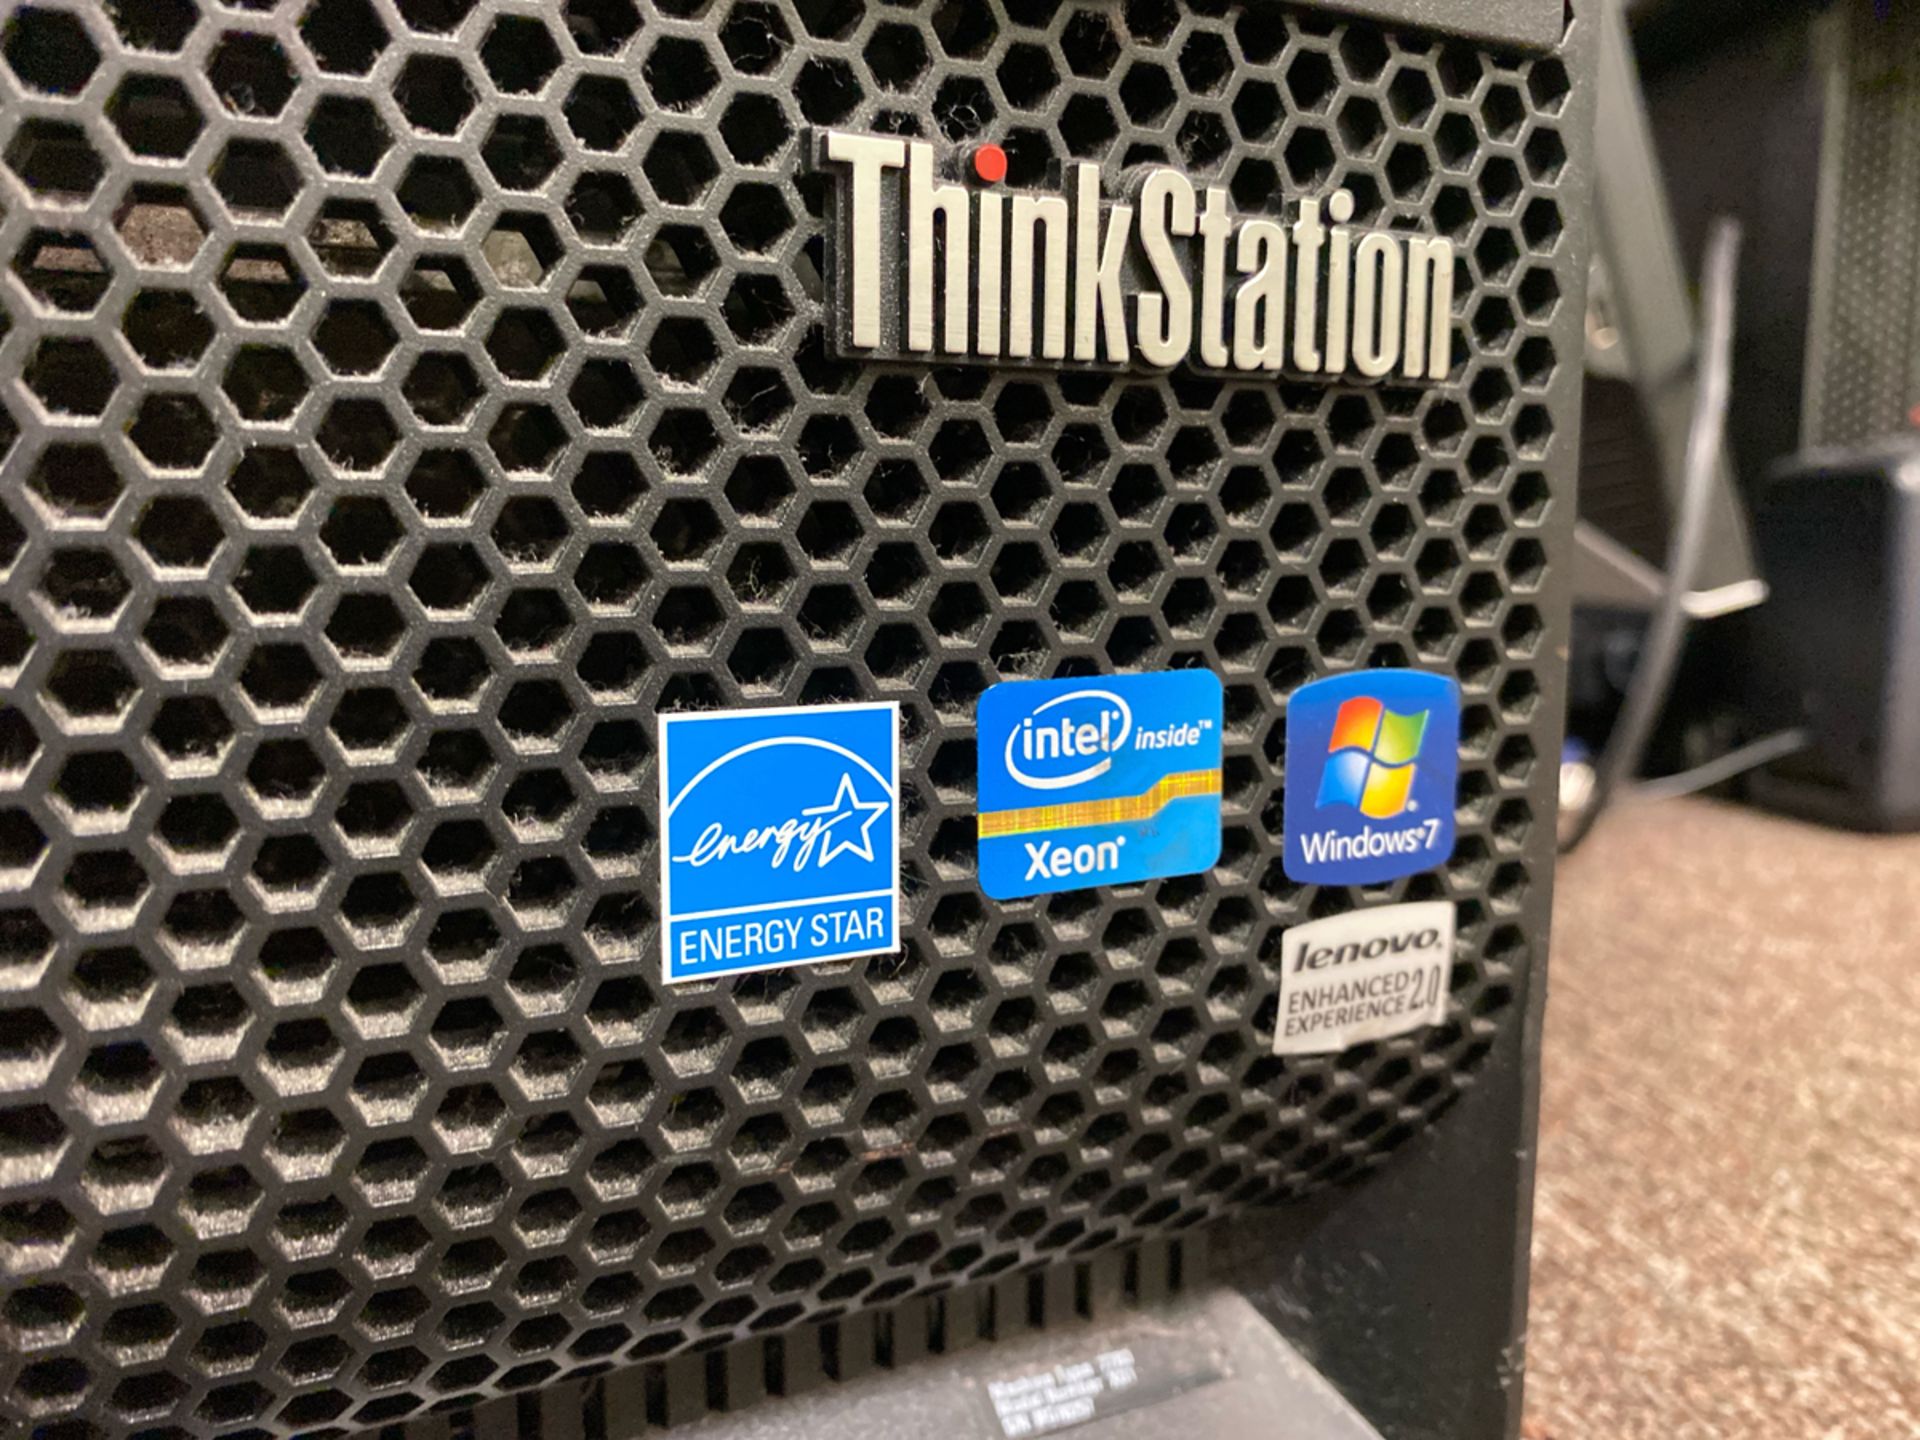 ThinkStation Intel Xeon Conputer - Image 3 of 4